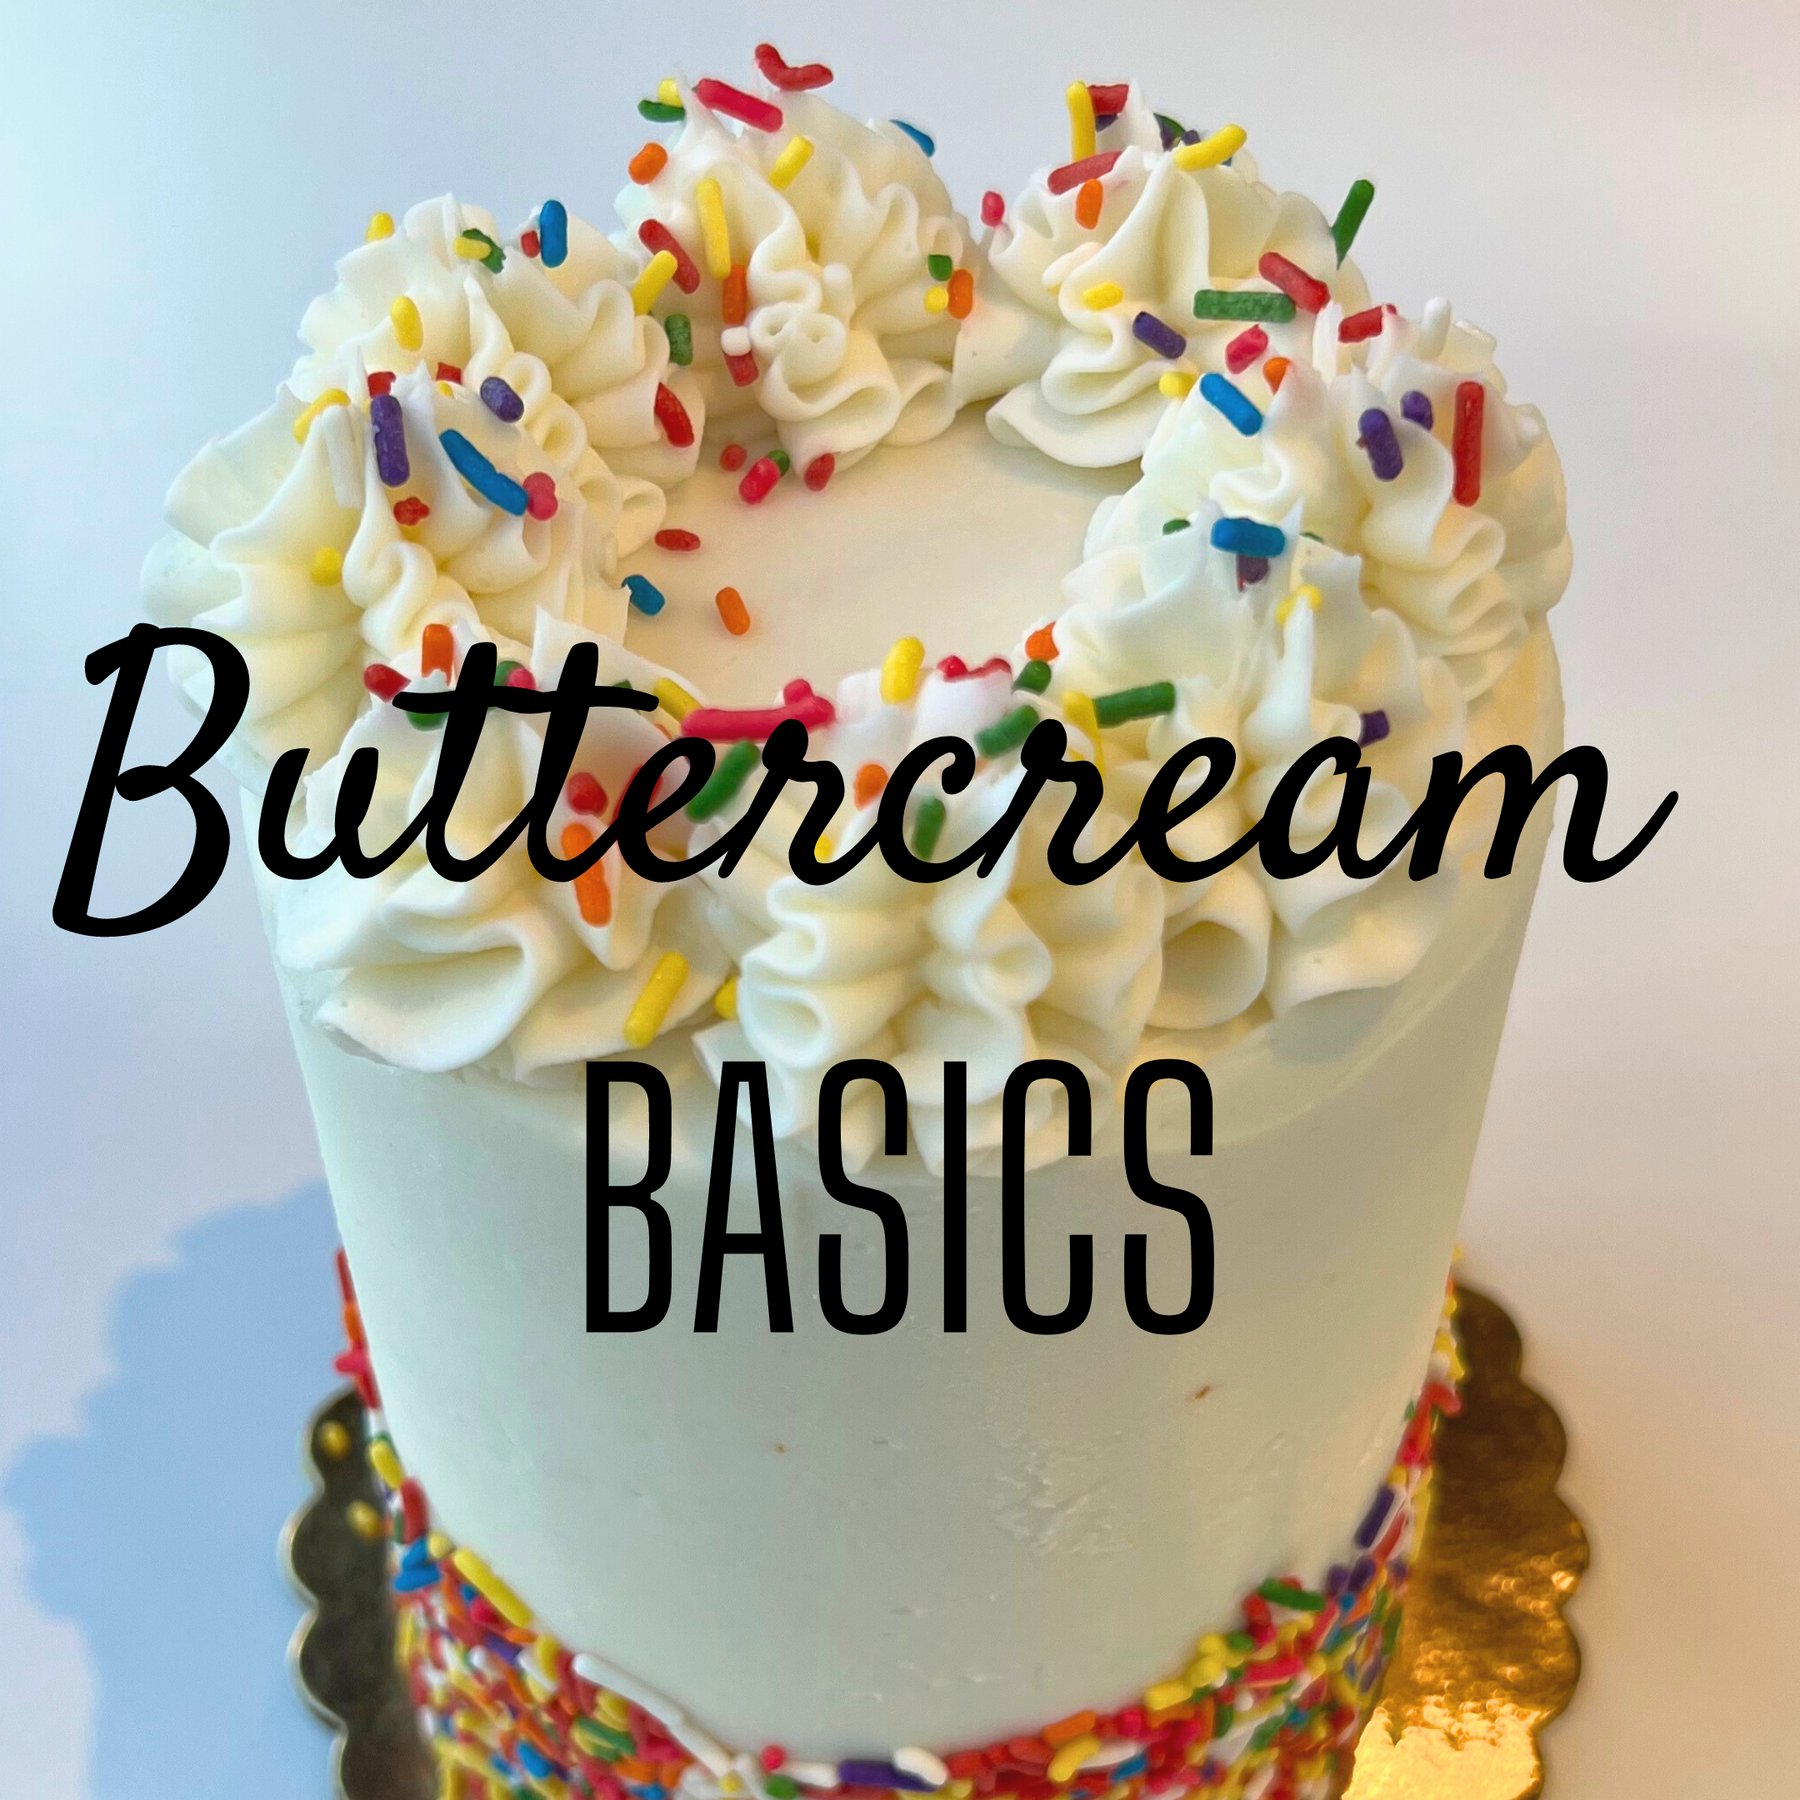 Buttercream Basics- Cake Decorating Class